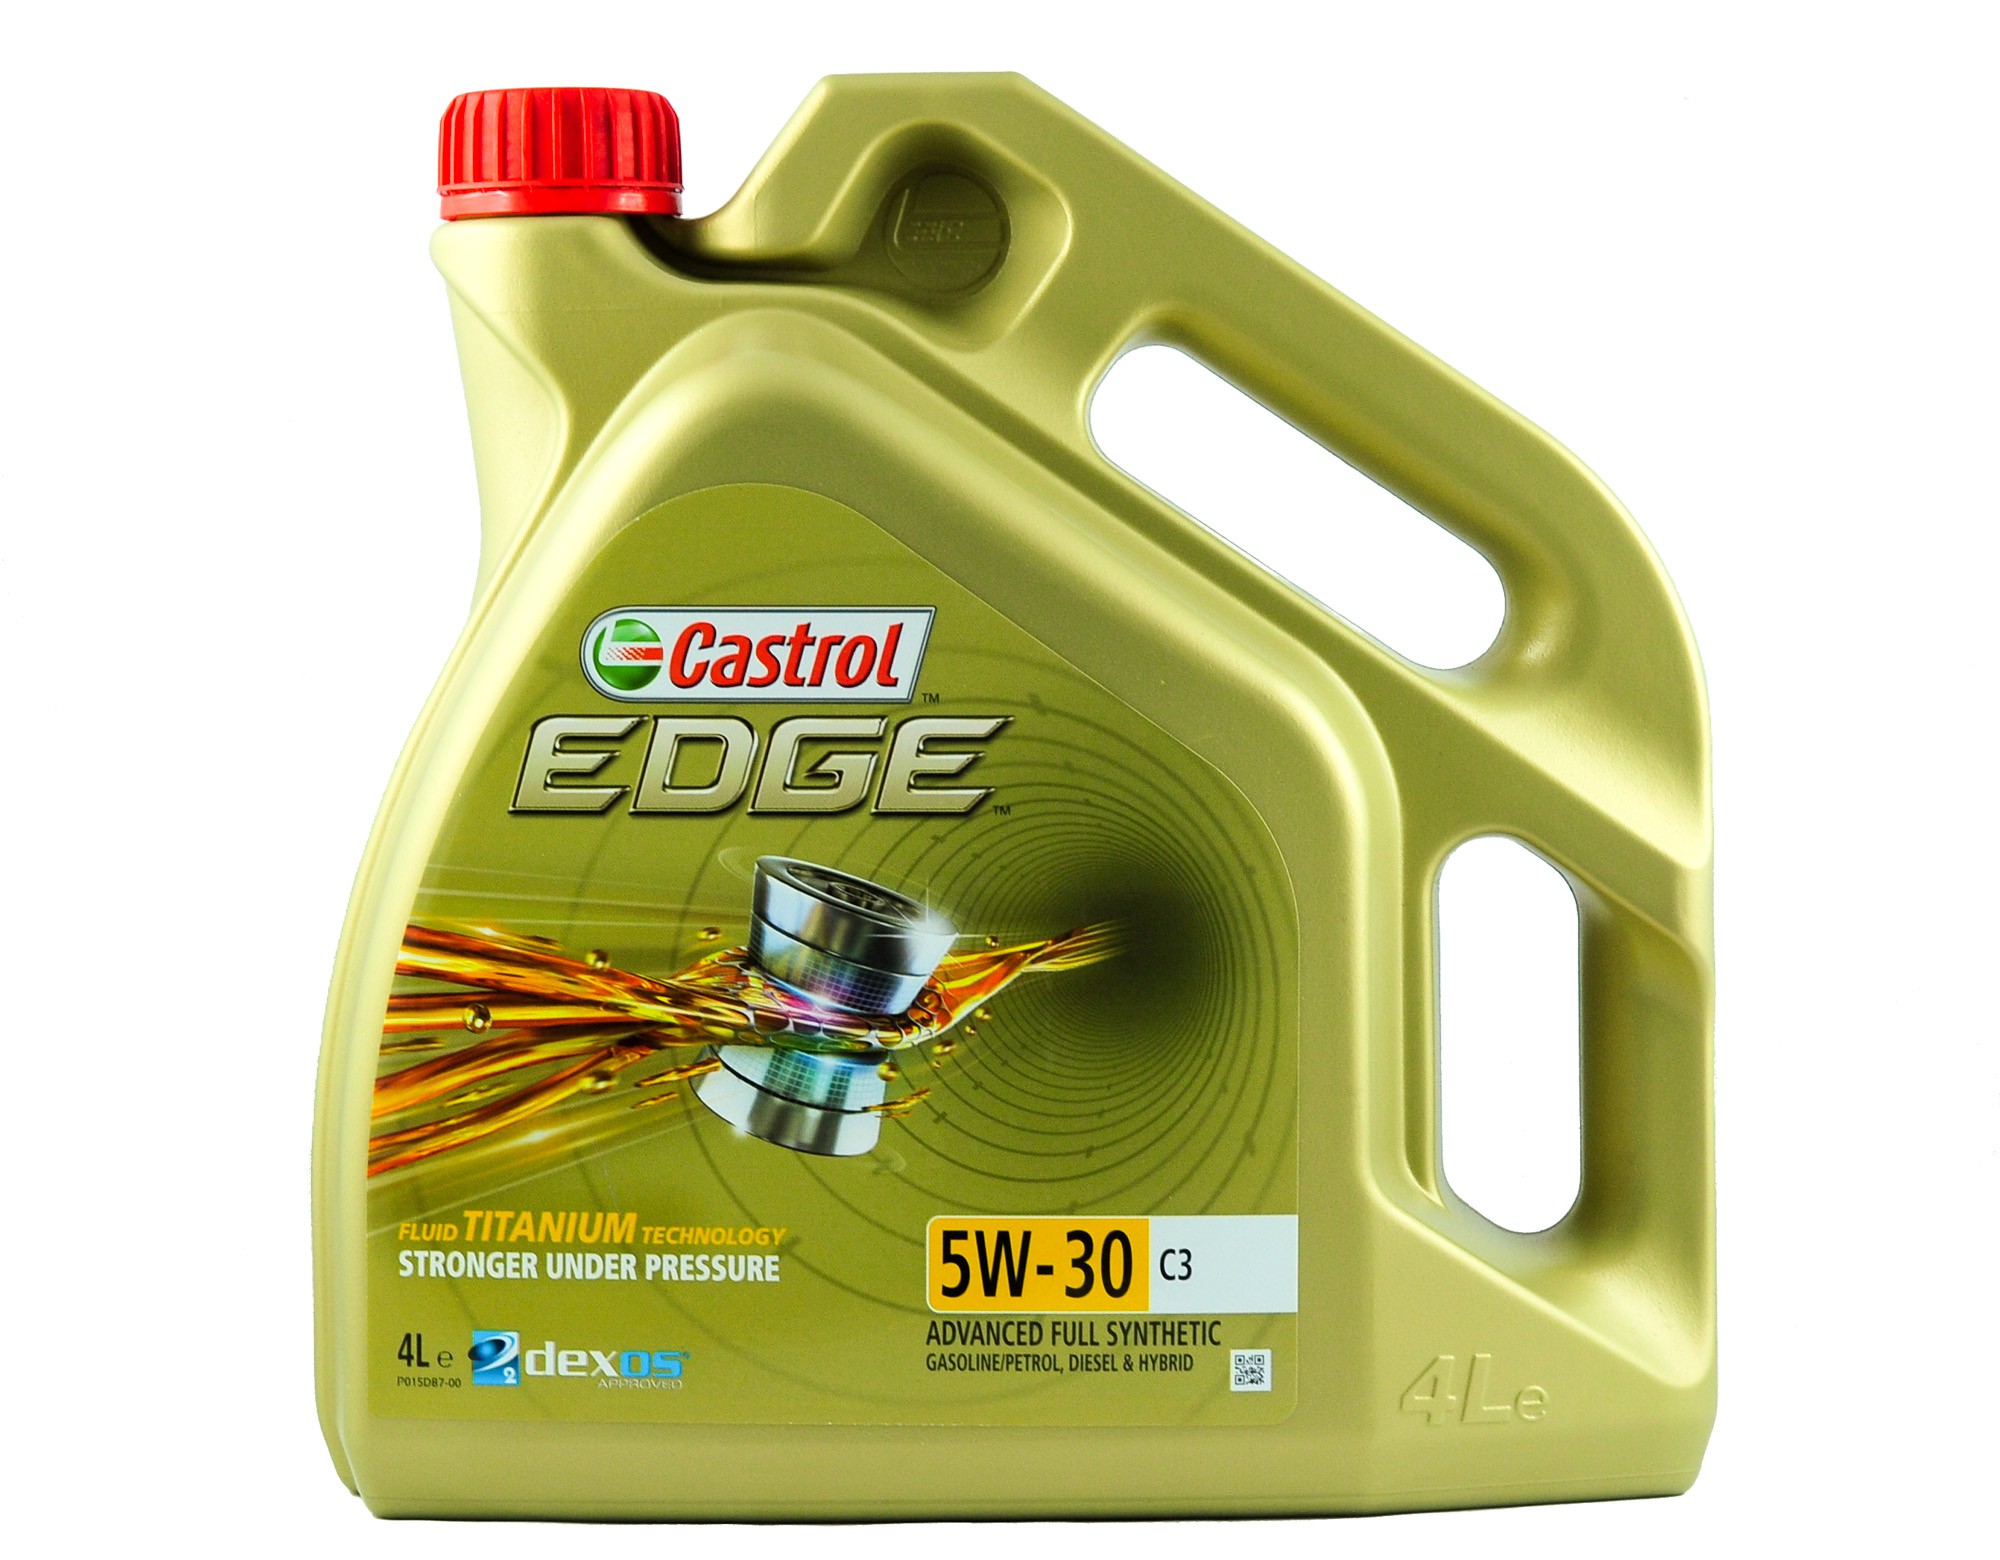 Castrol EDGE 5W-30 C3 Motoröl Wie viele Liter? 4 L